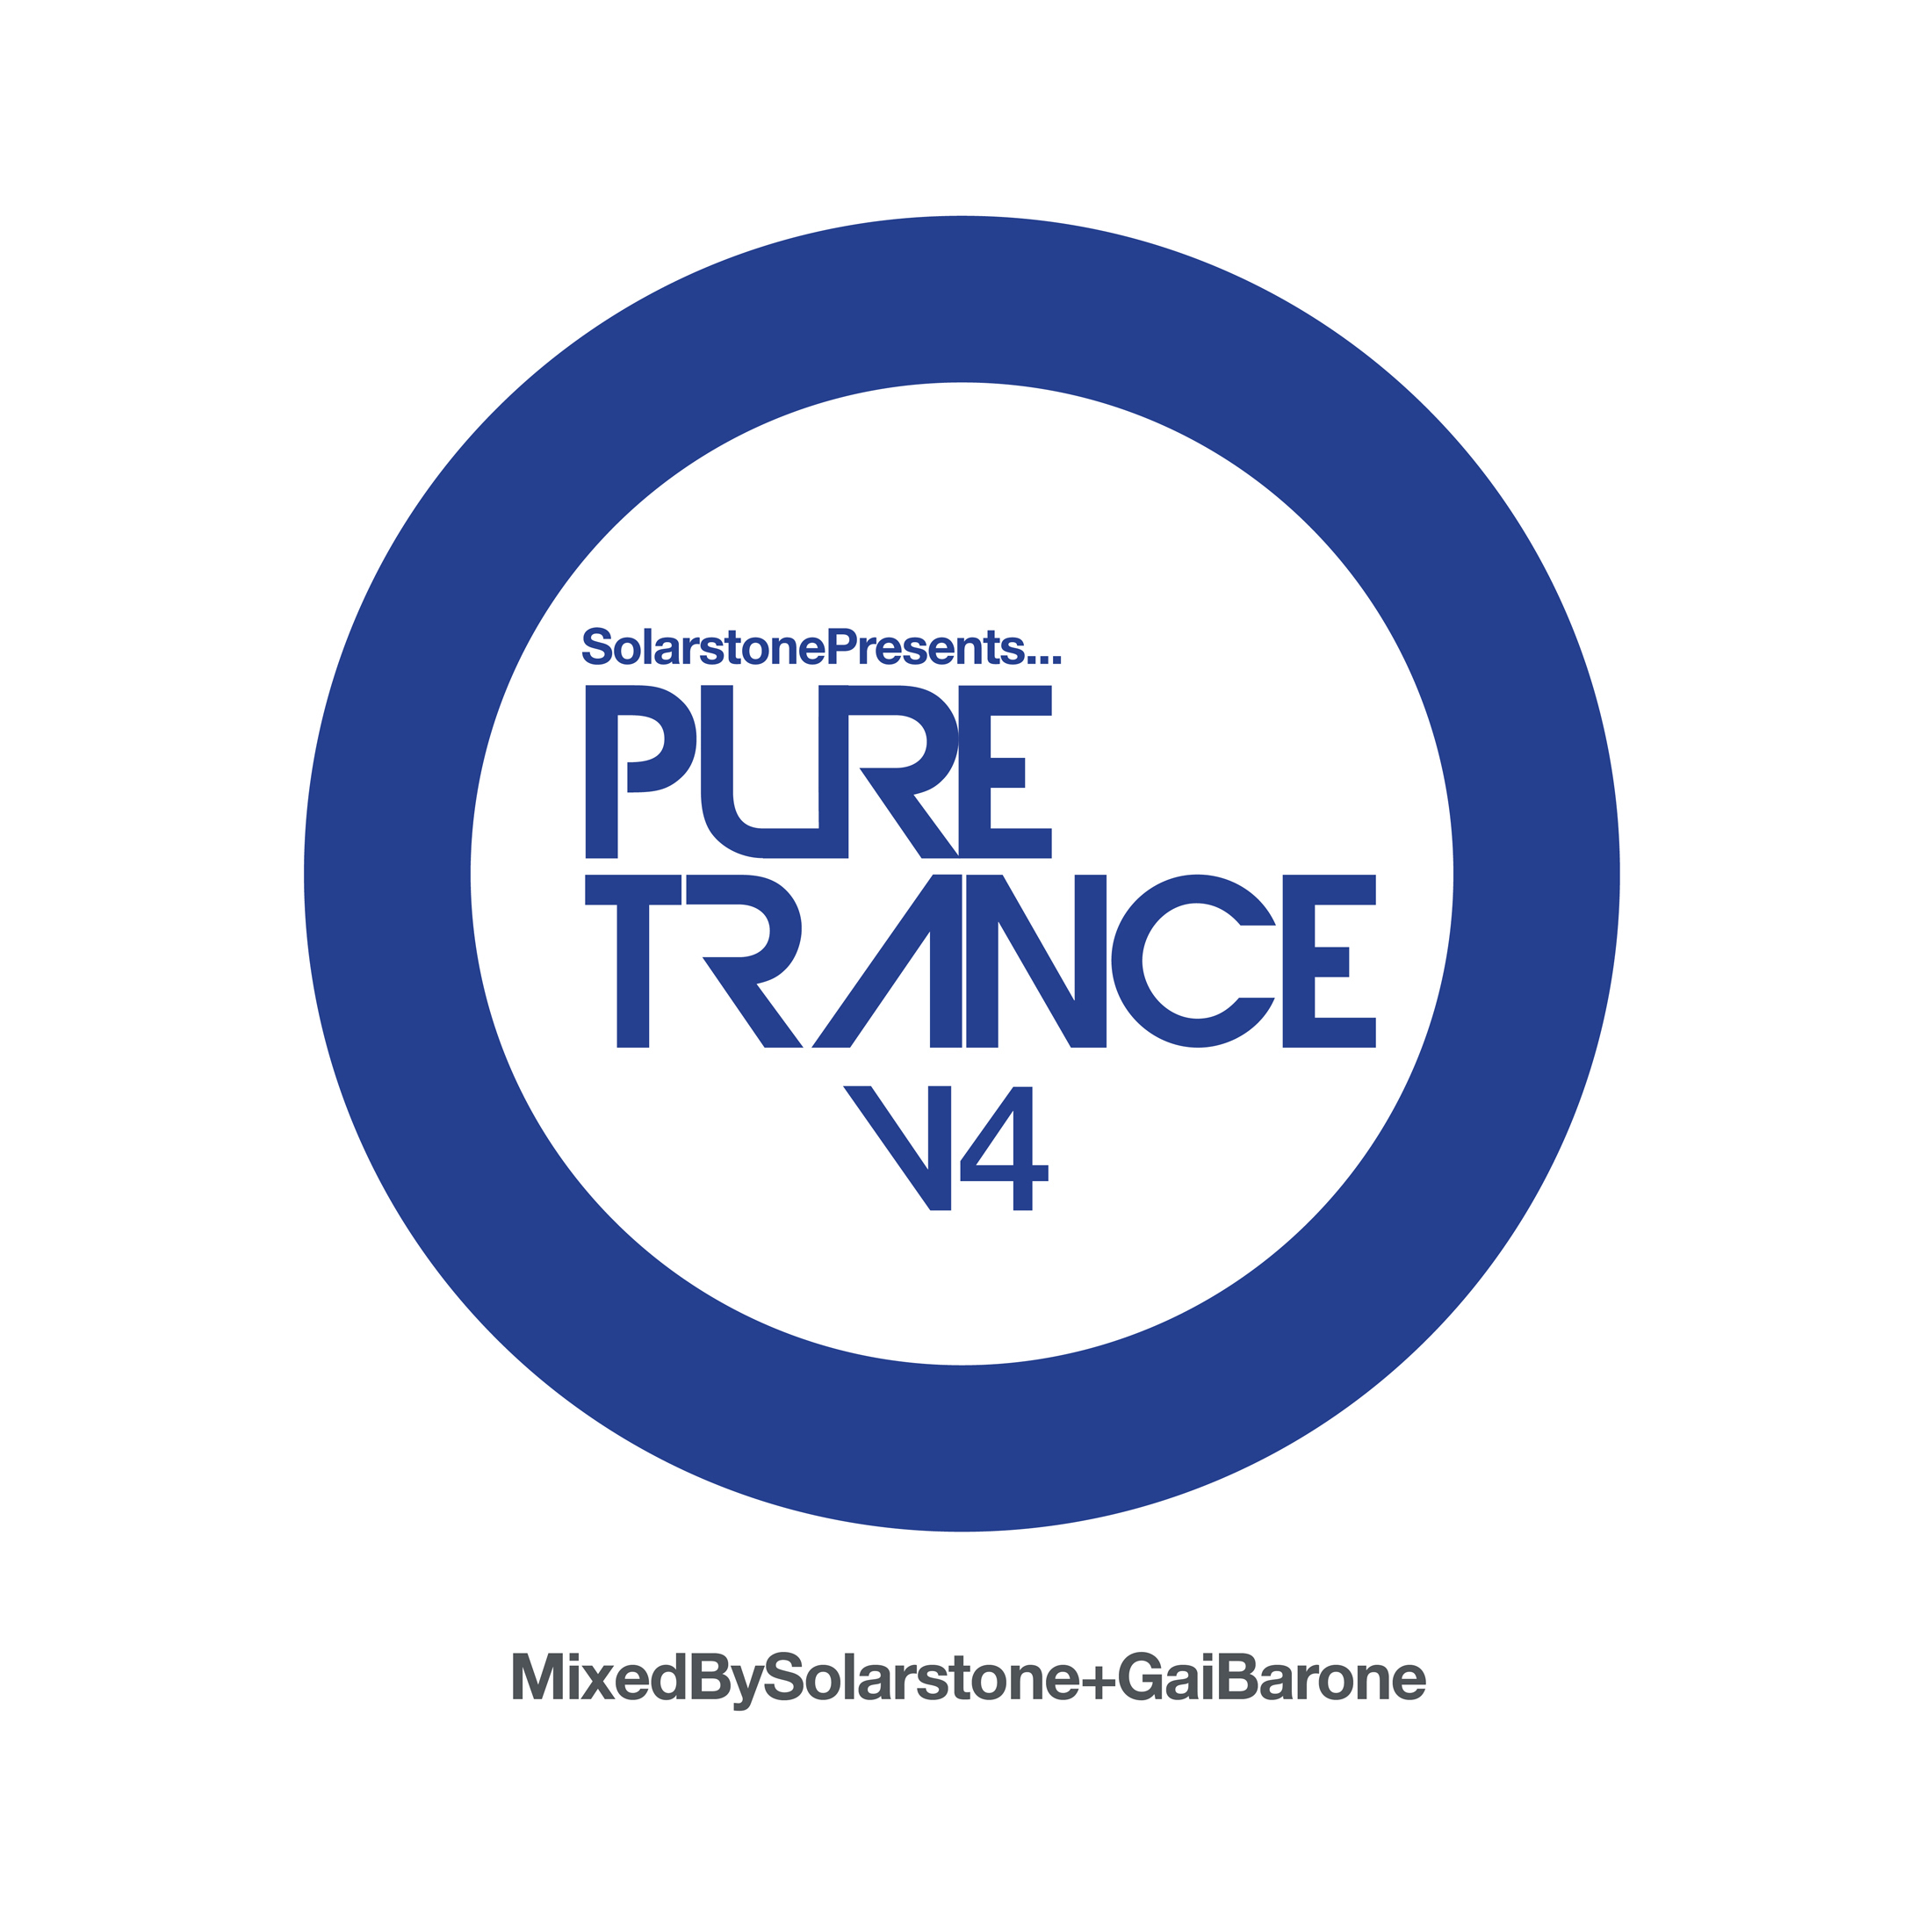 Solarstone presents Pure Trance 4 - Mixed By Solarstone & Gai Barone